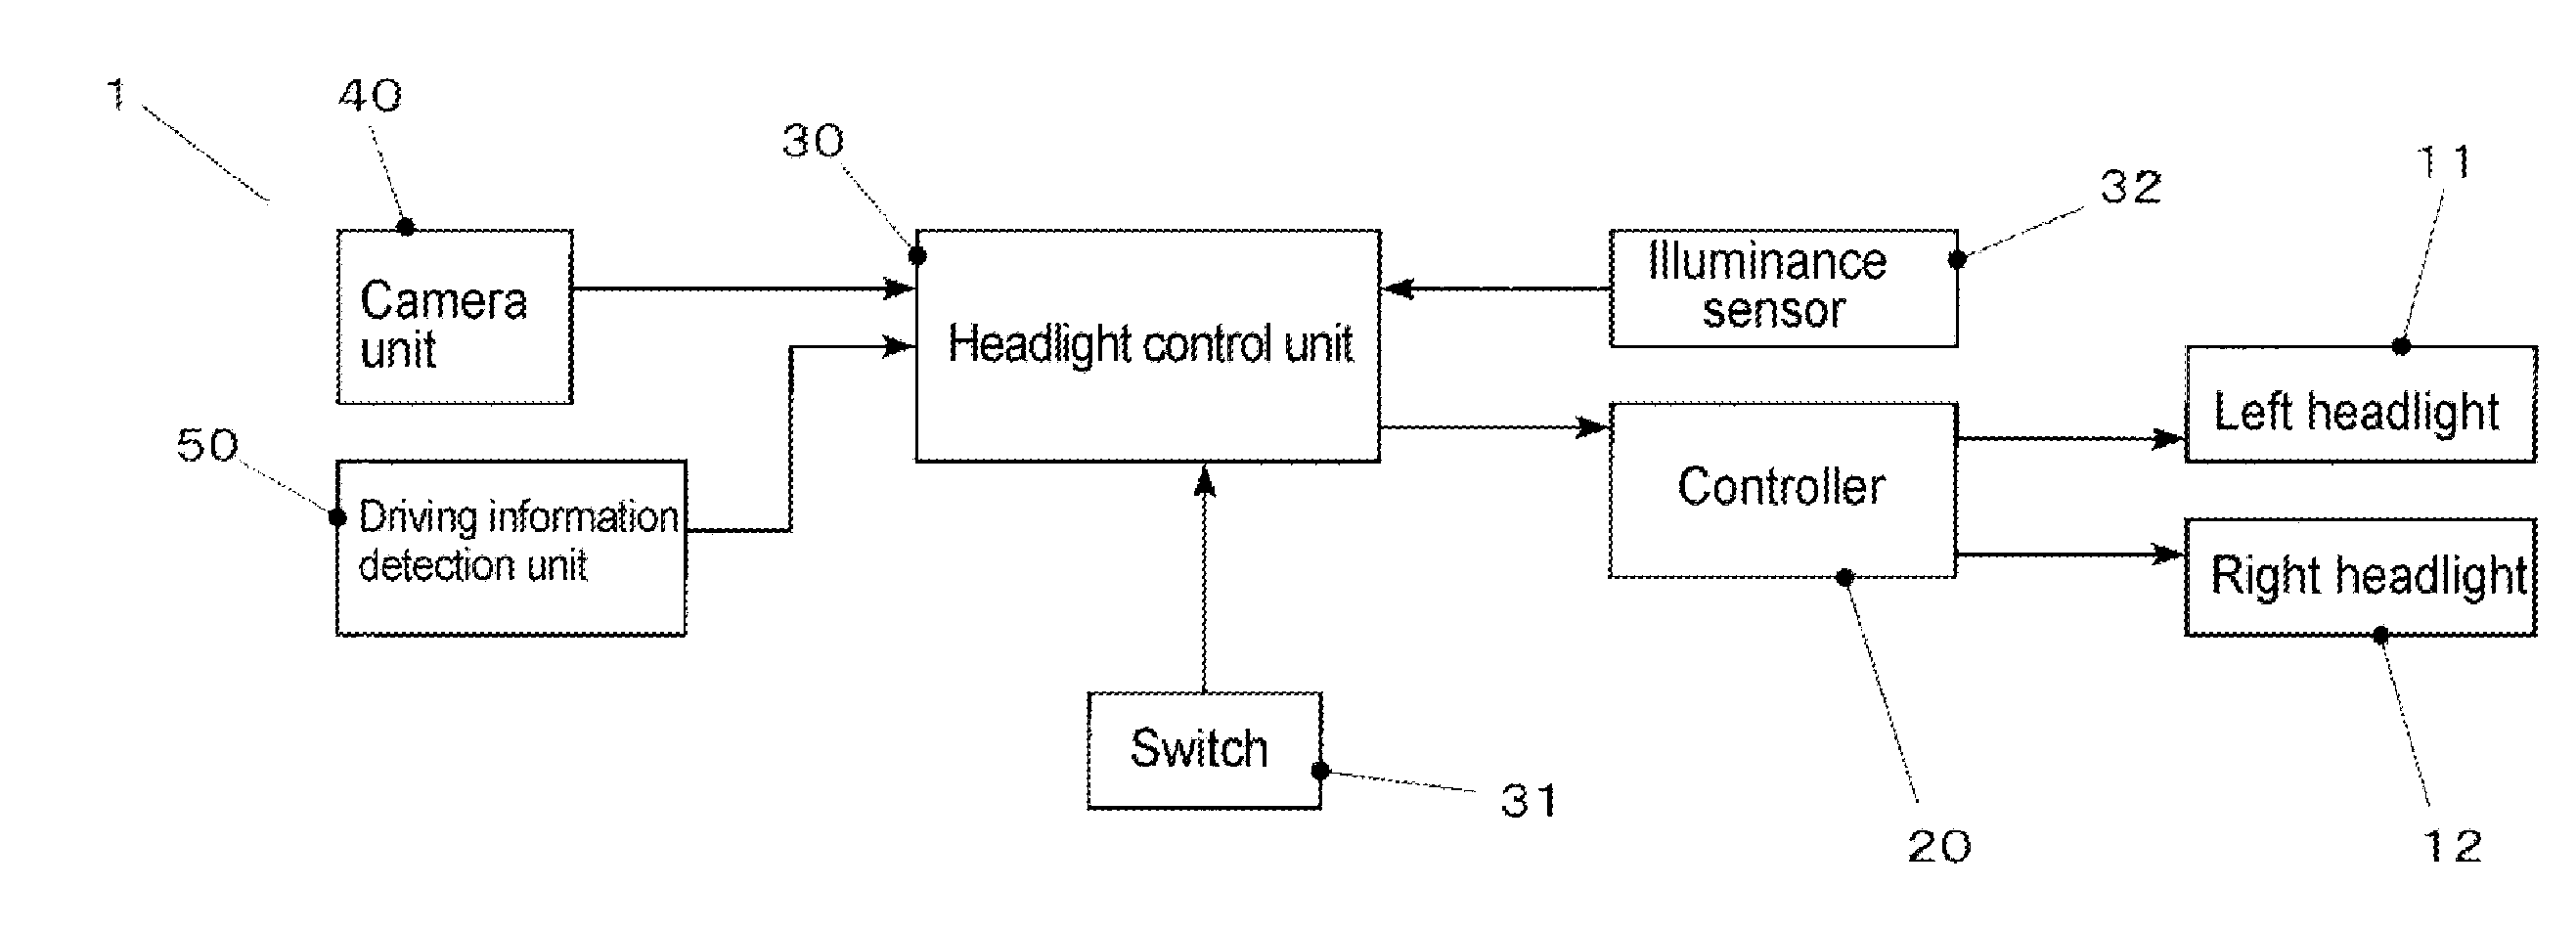 Headlight control device